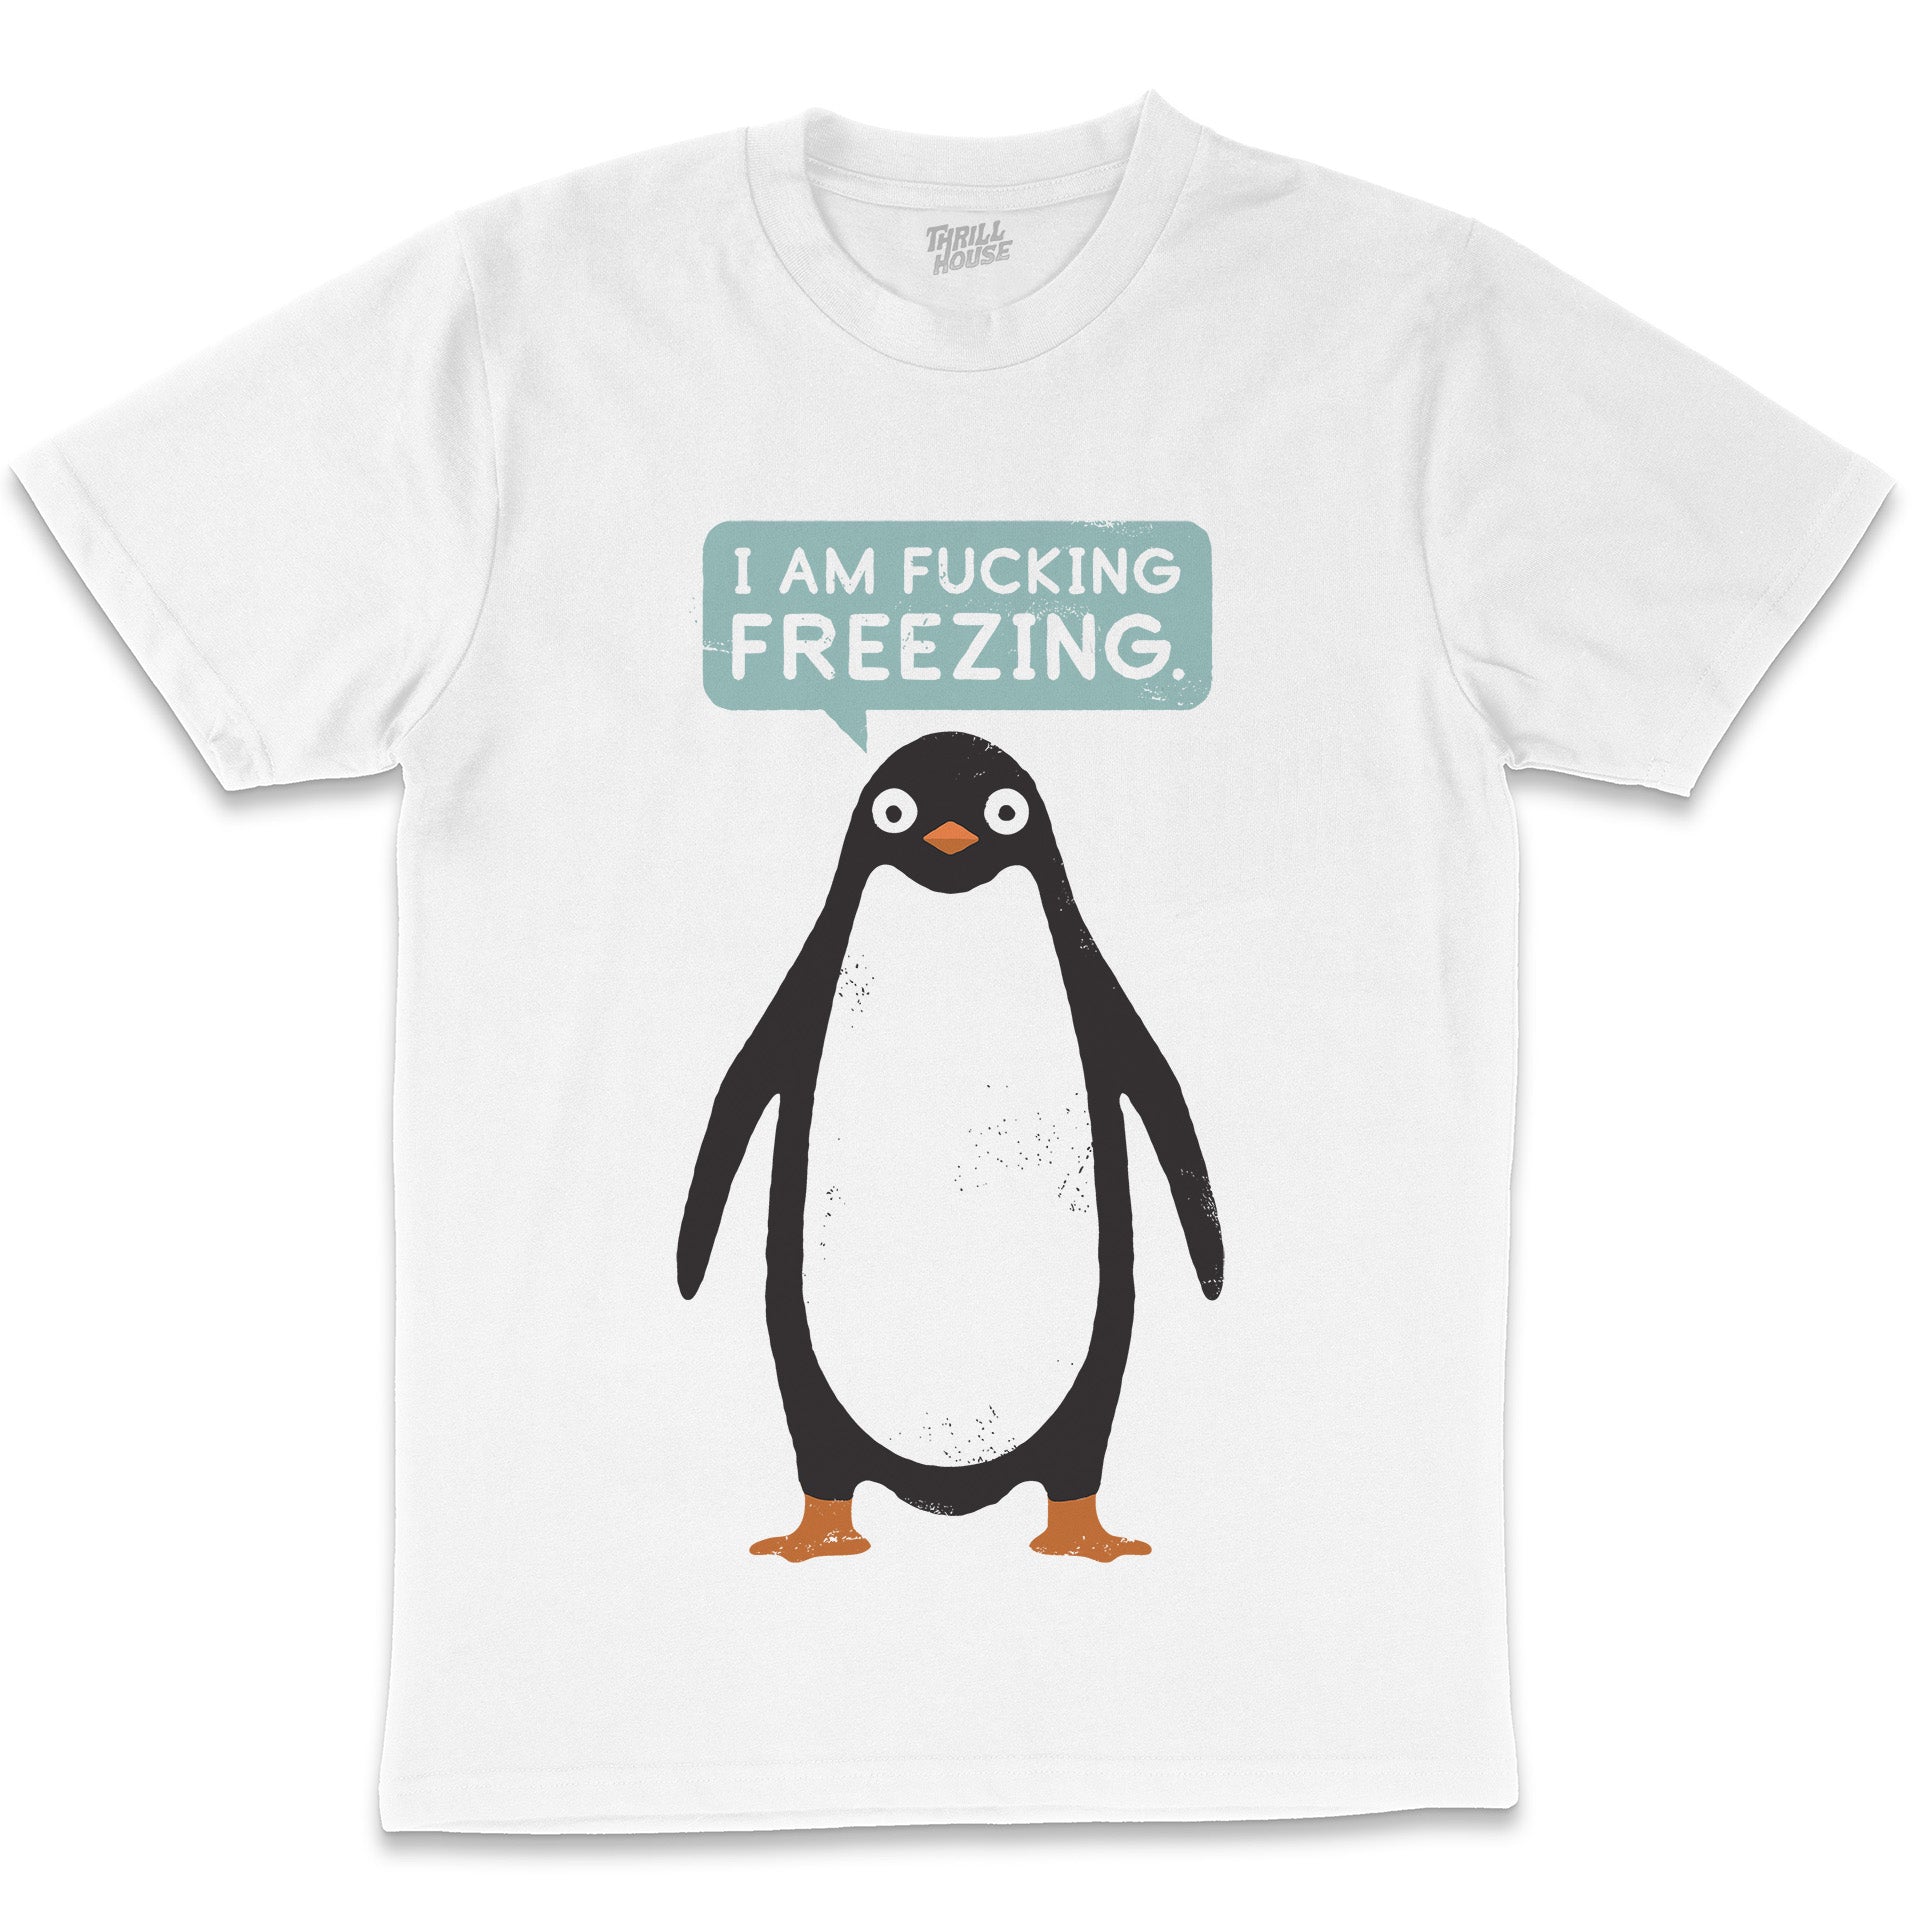 Talking Penguin Rude Offensive Animal Anti-Social Cute Animal Cotton T-Shirt